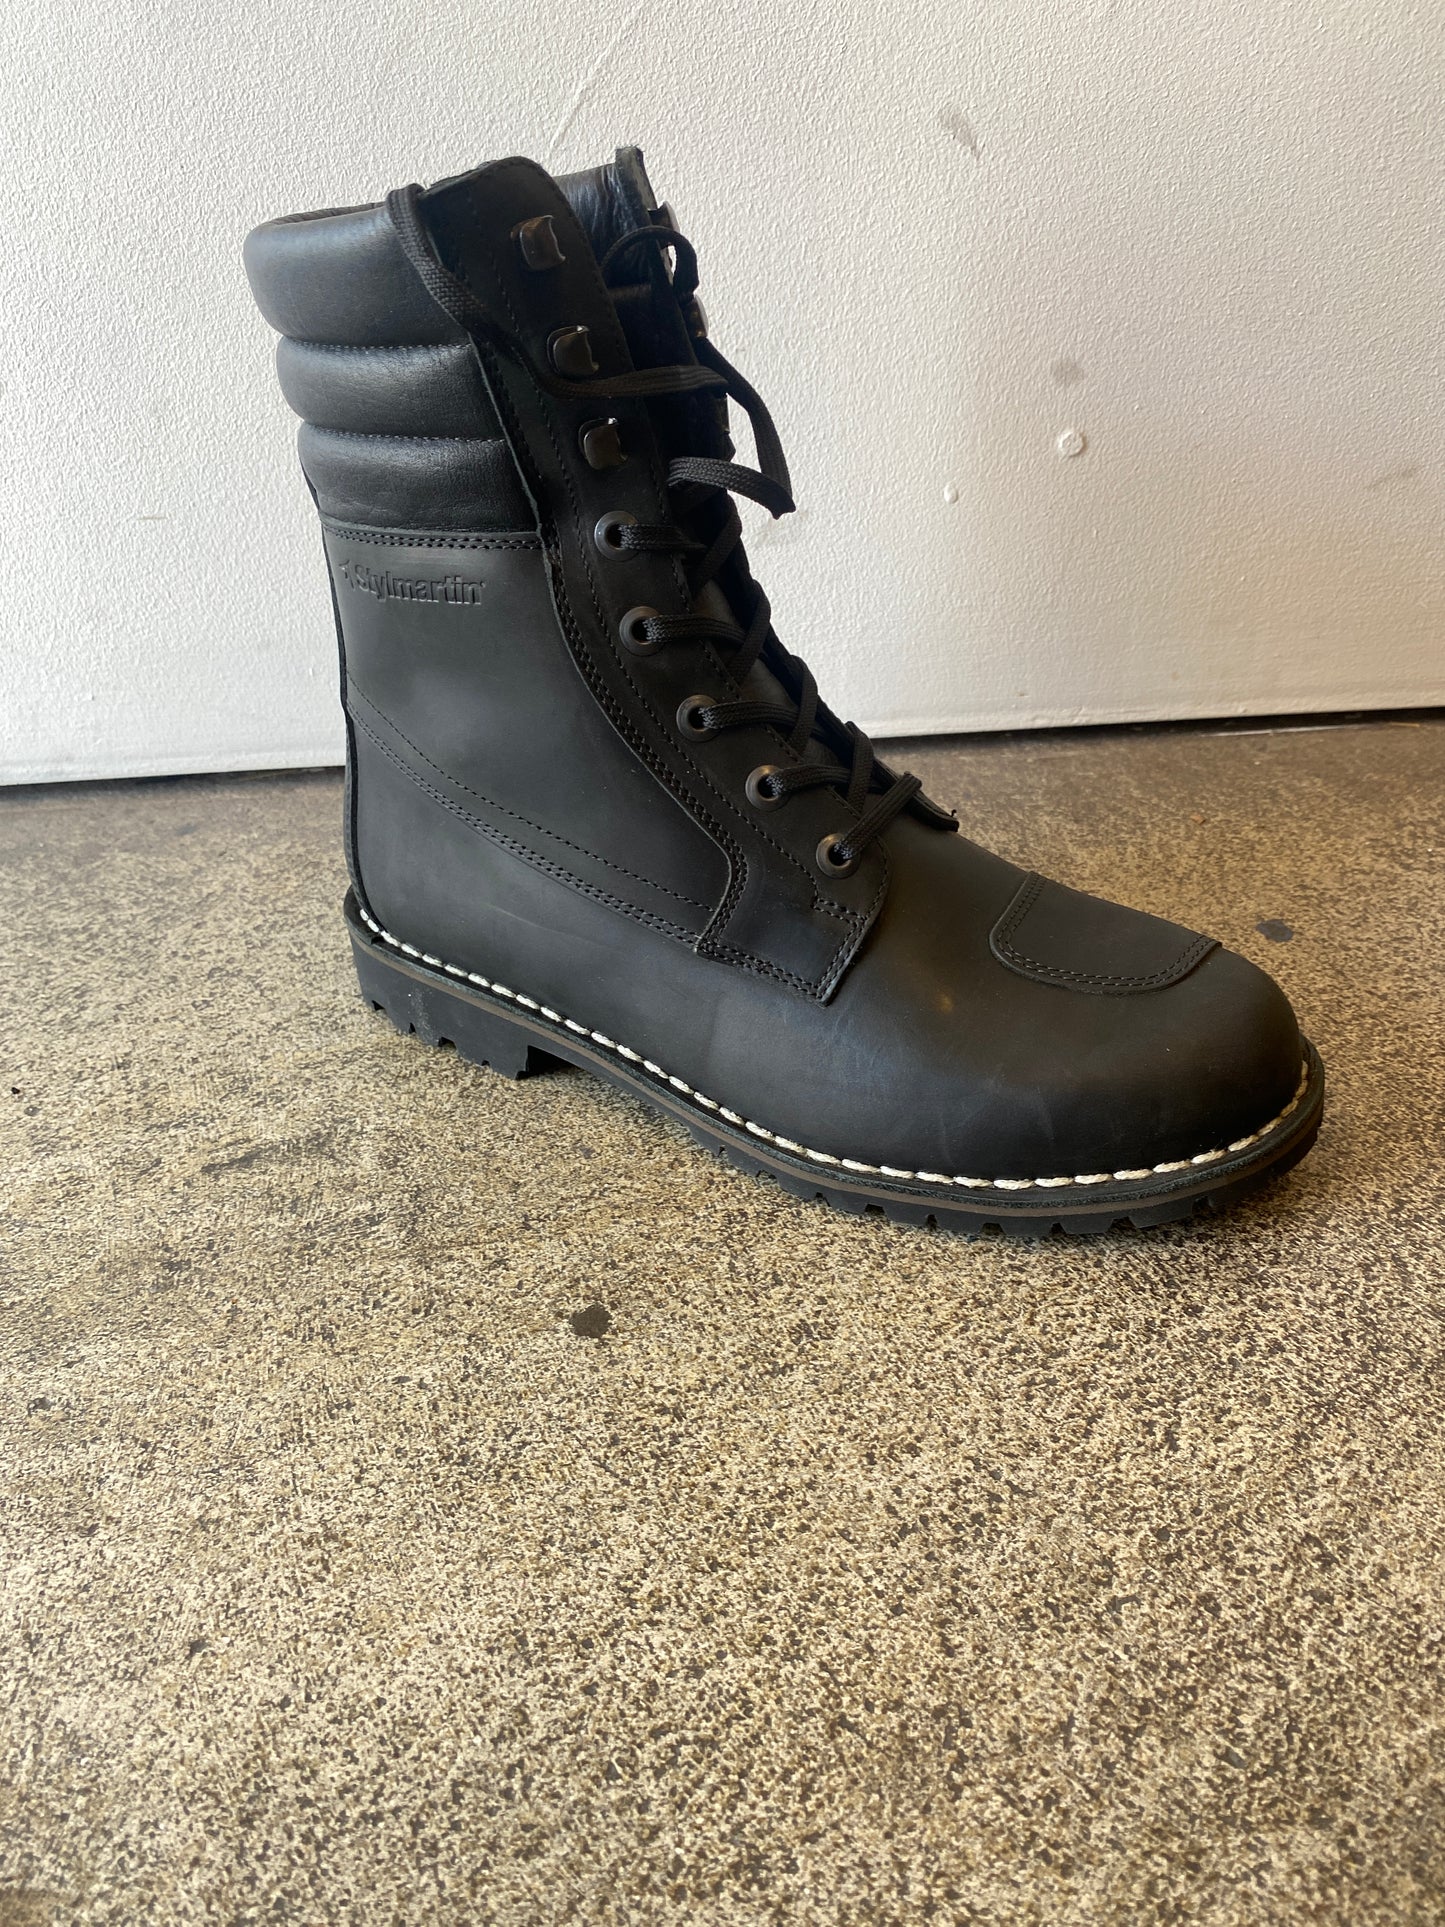 STYLMARTIN Indian Boots - Nero/Black